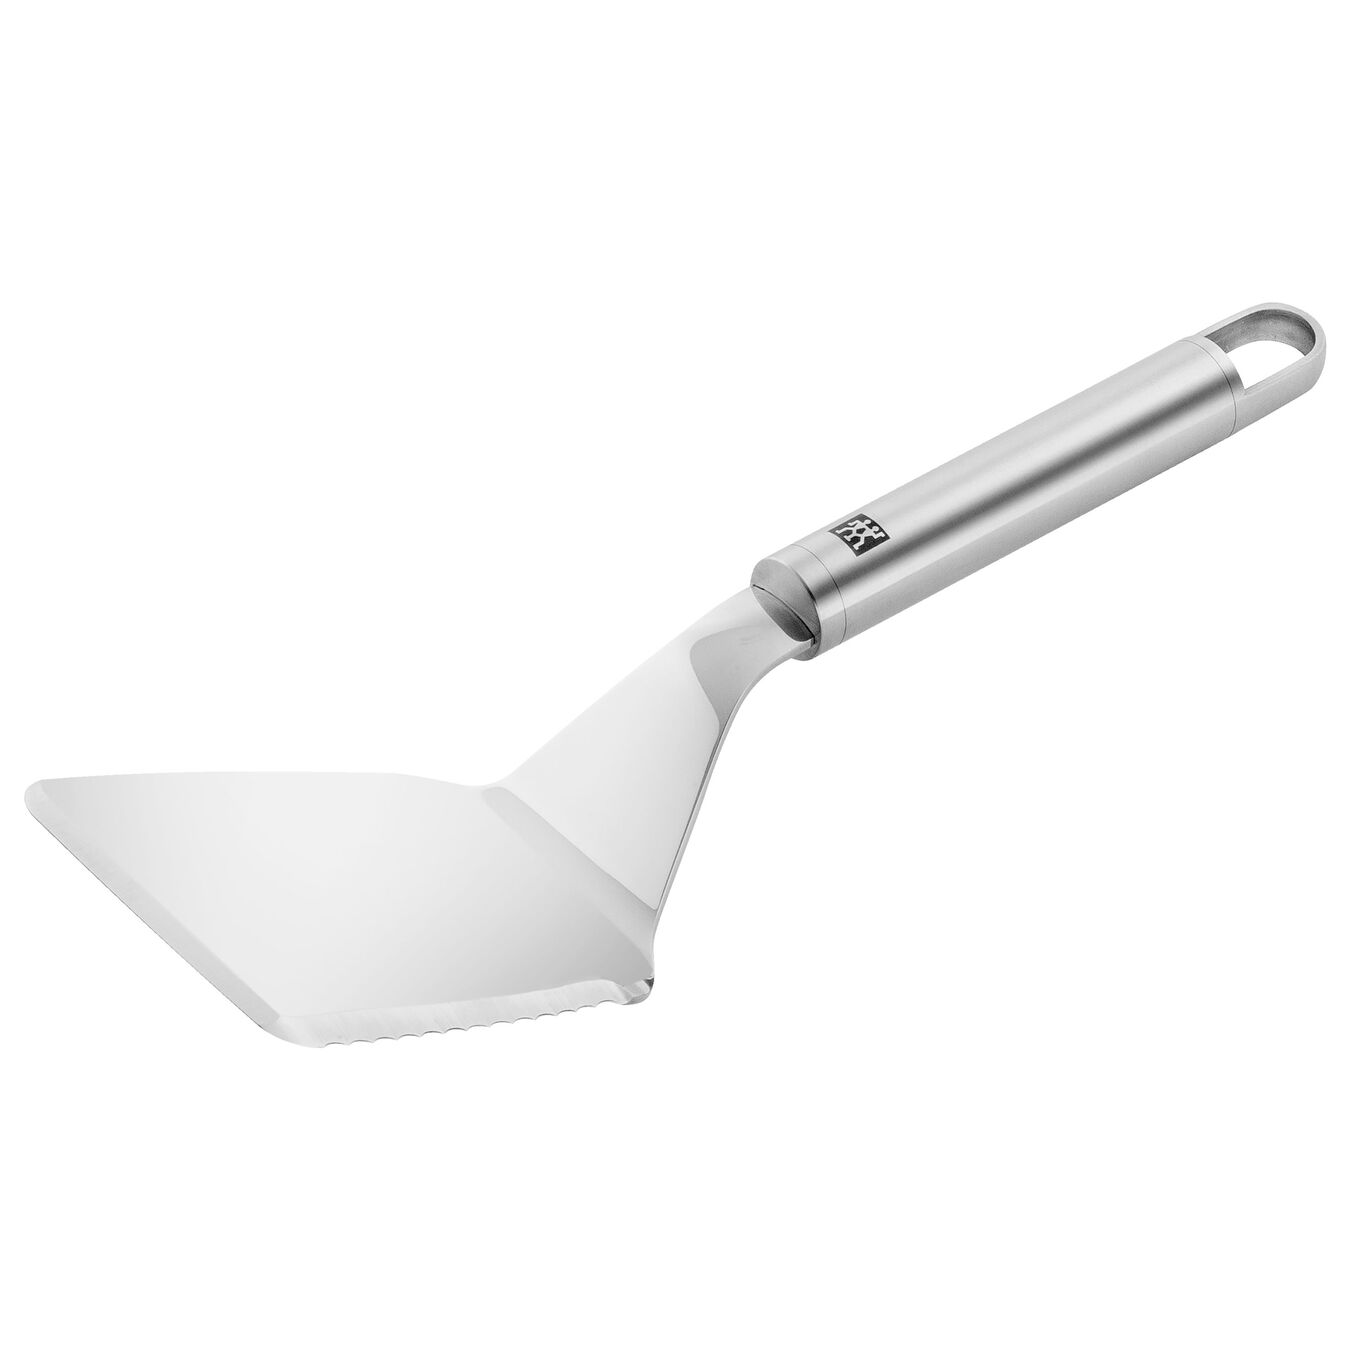 Lasagne spatula, 18/10 Stainless Steel,,large 1